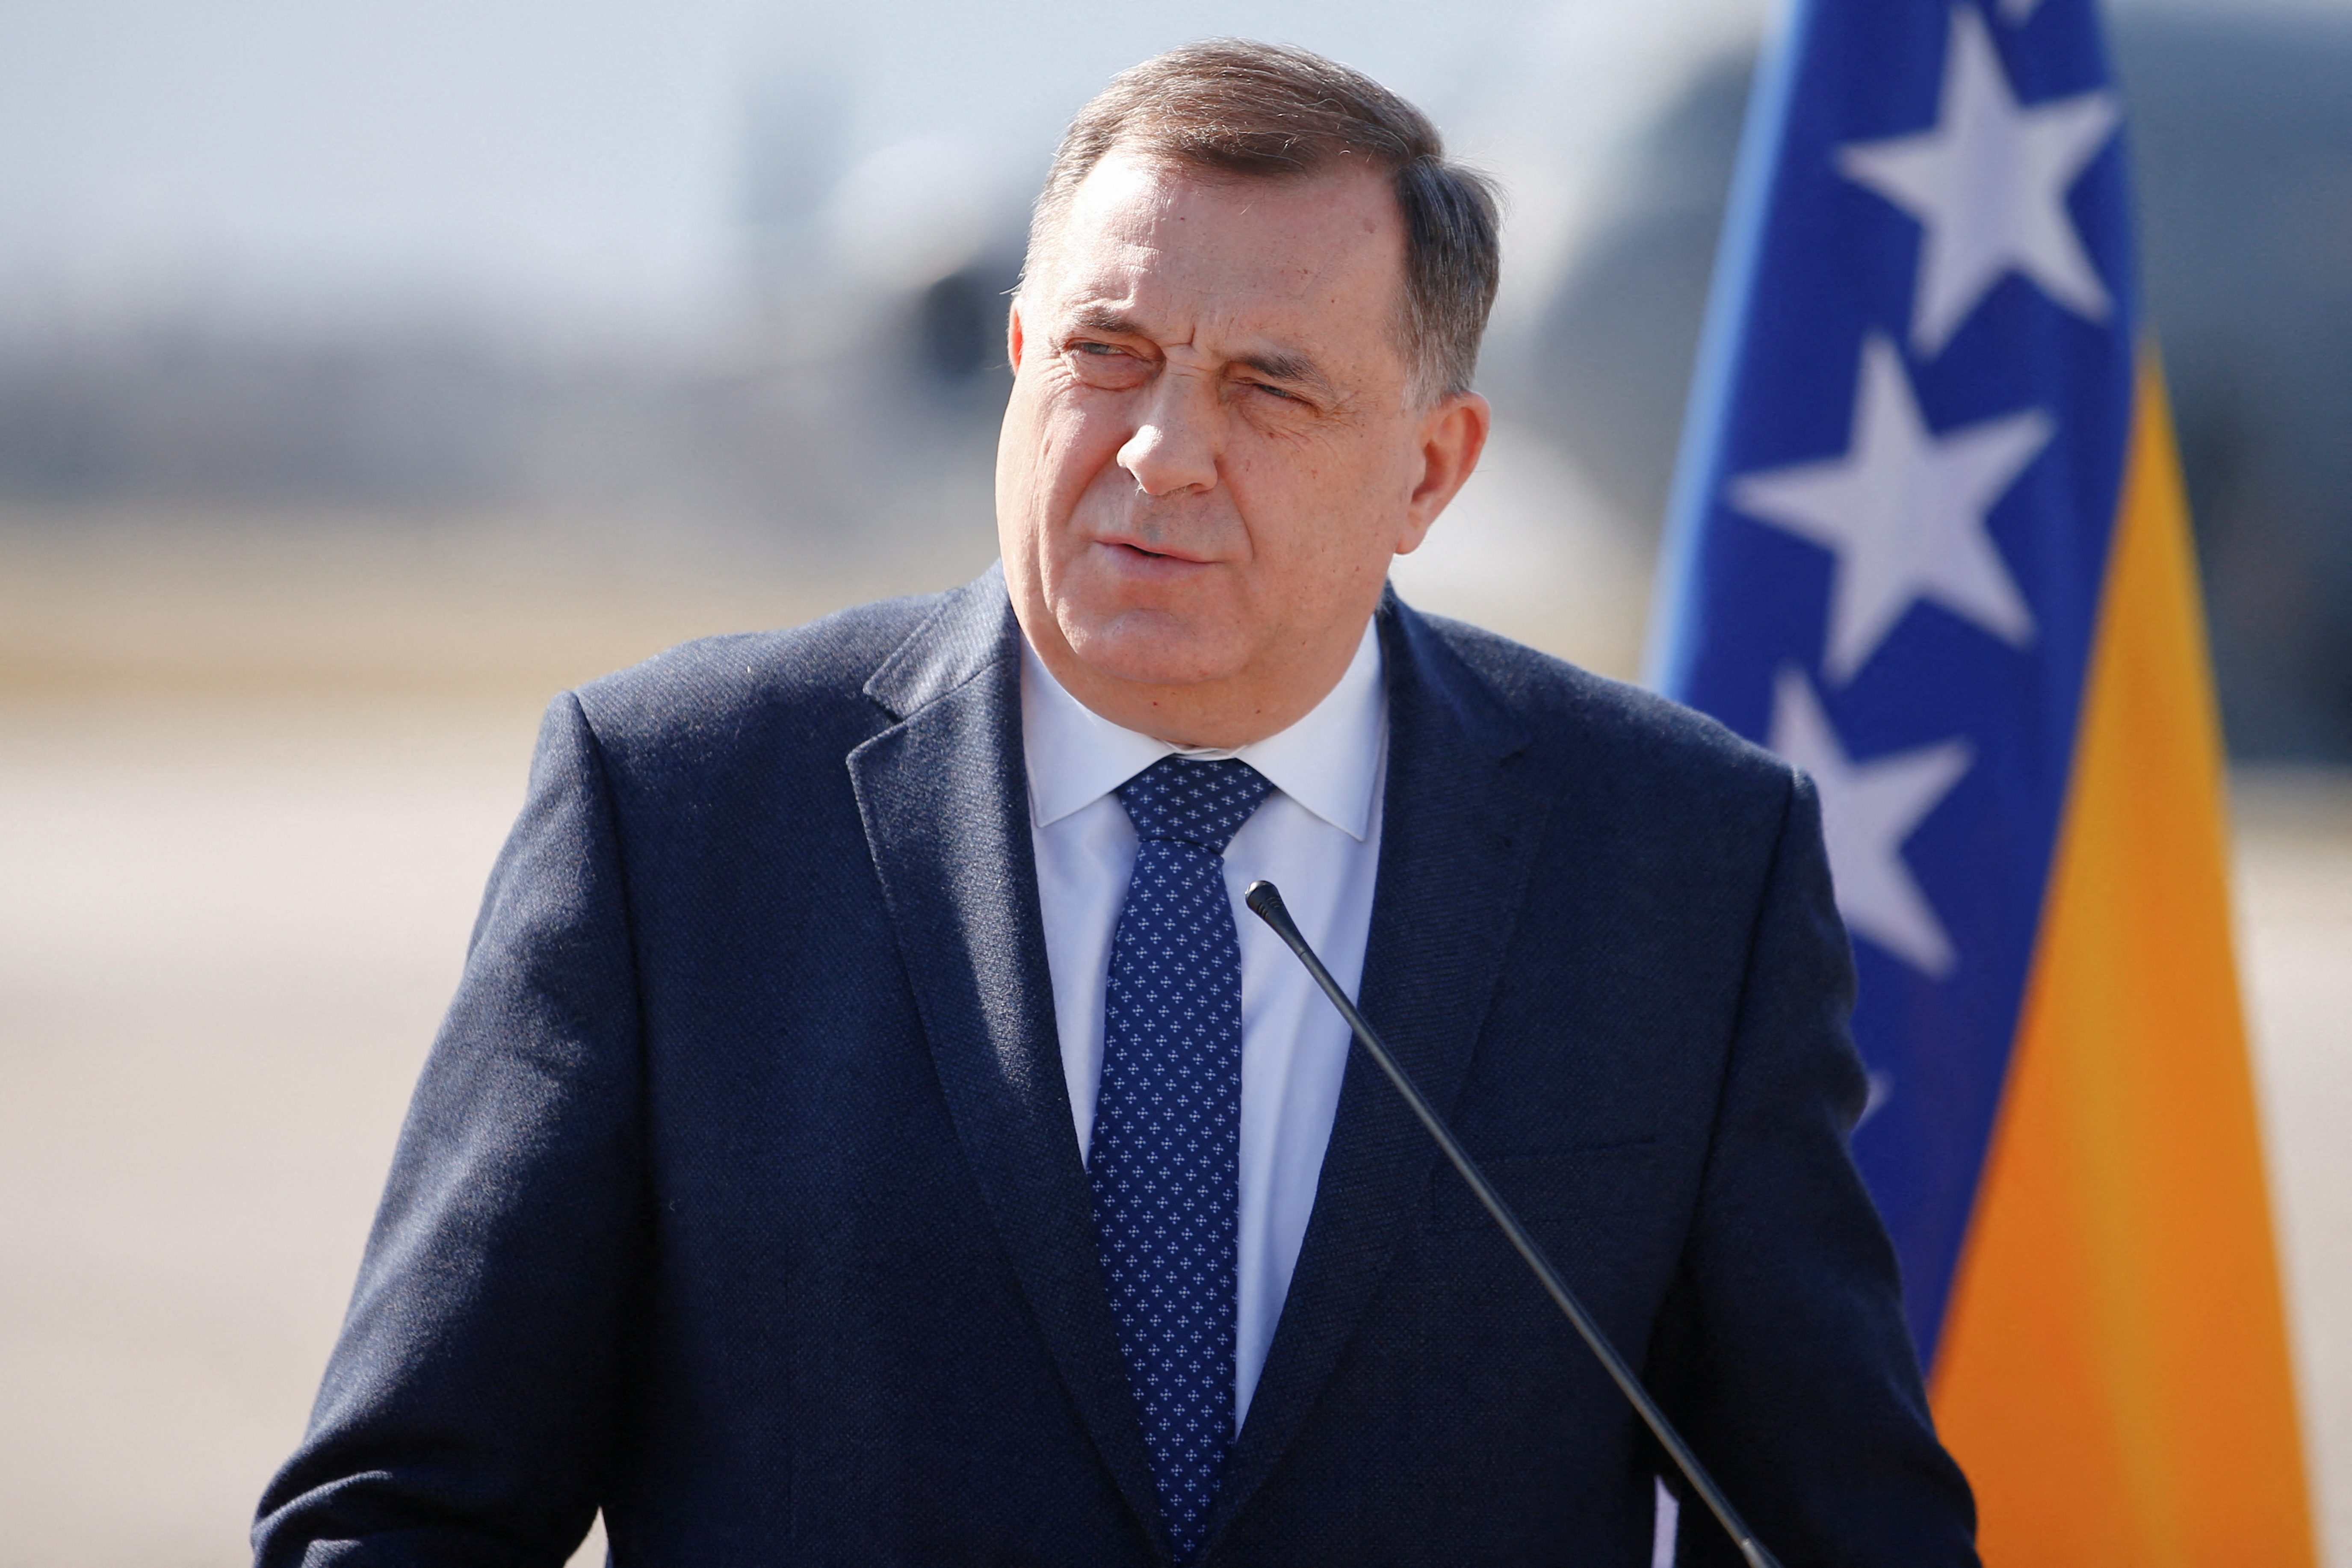 Serbia's President Vucic donates COVID-19 vaccines to Bosnia's members of tripartite presidency Dodik, Dzaferovic and Komsic, in Sarajevo